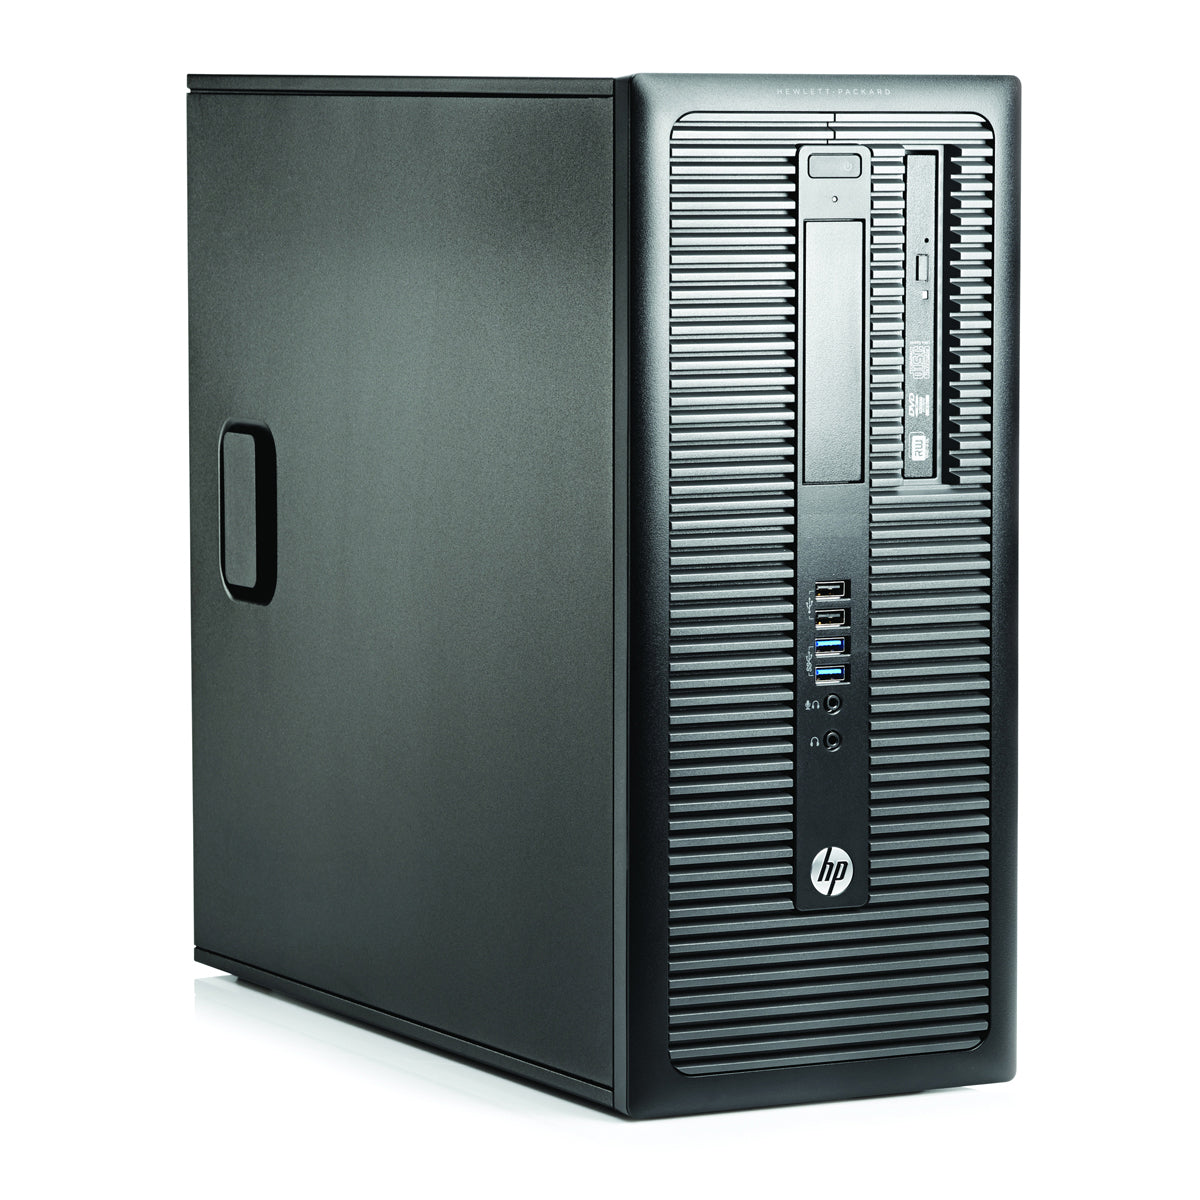 HP EliteDesk 800 G1 Tower PC, Intel Quad-Core i5-4570 3.2GHz